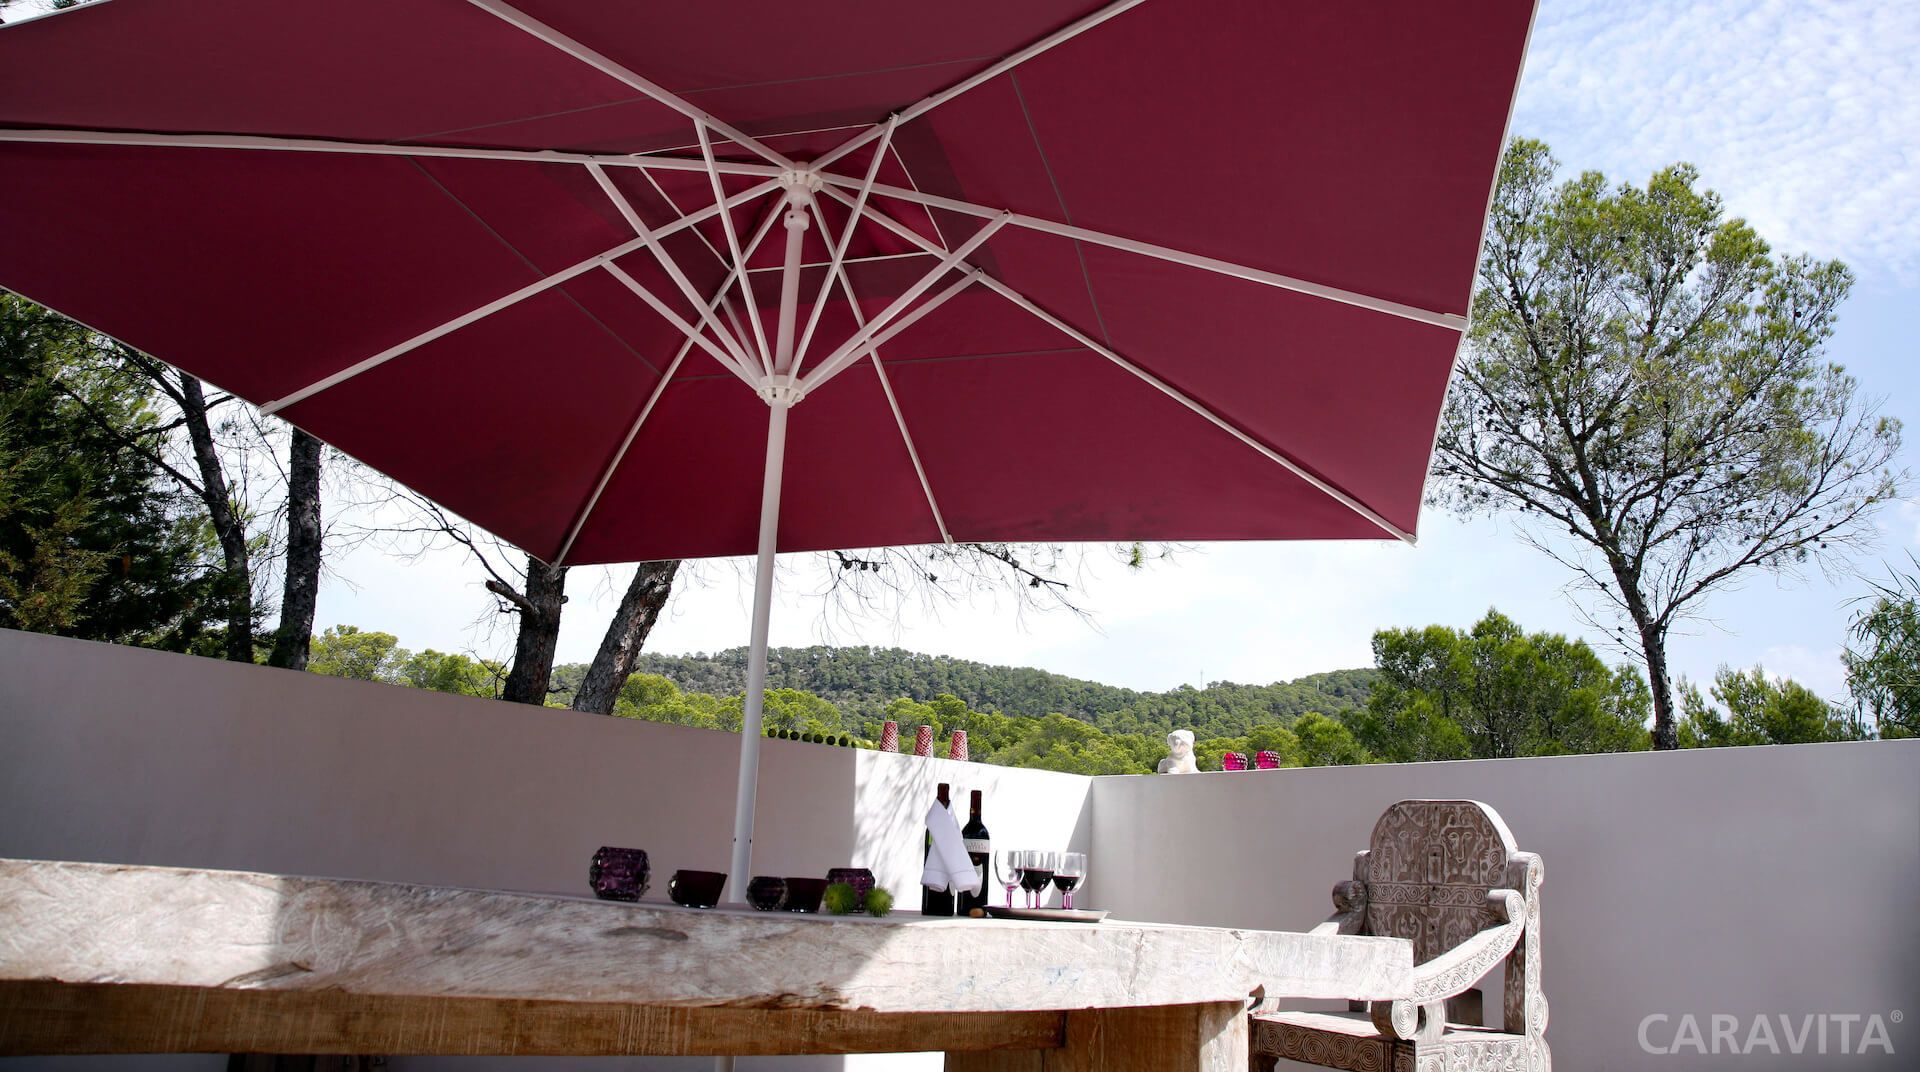 Samara umbrella from Caravita shading an outdoor dining area